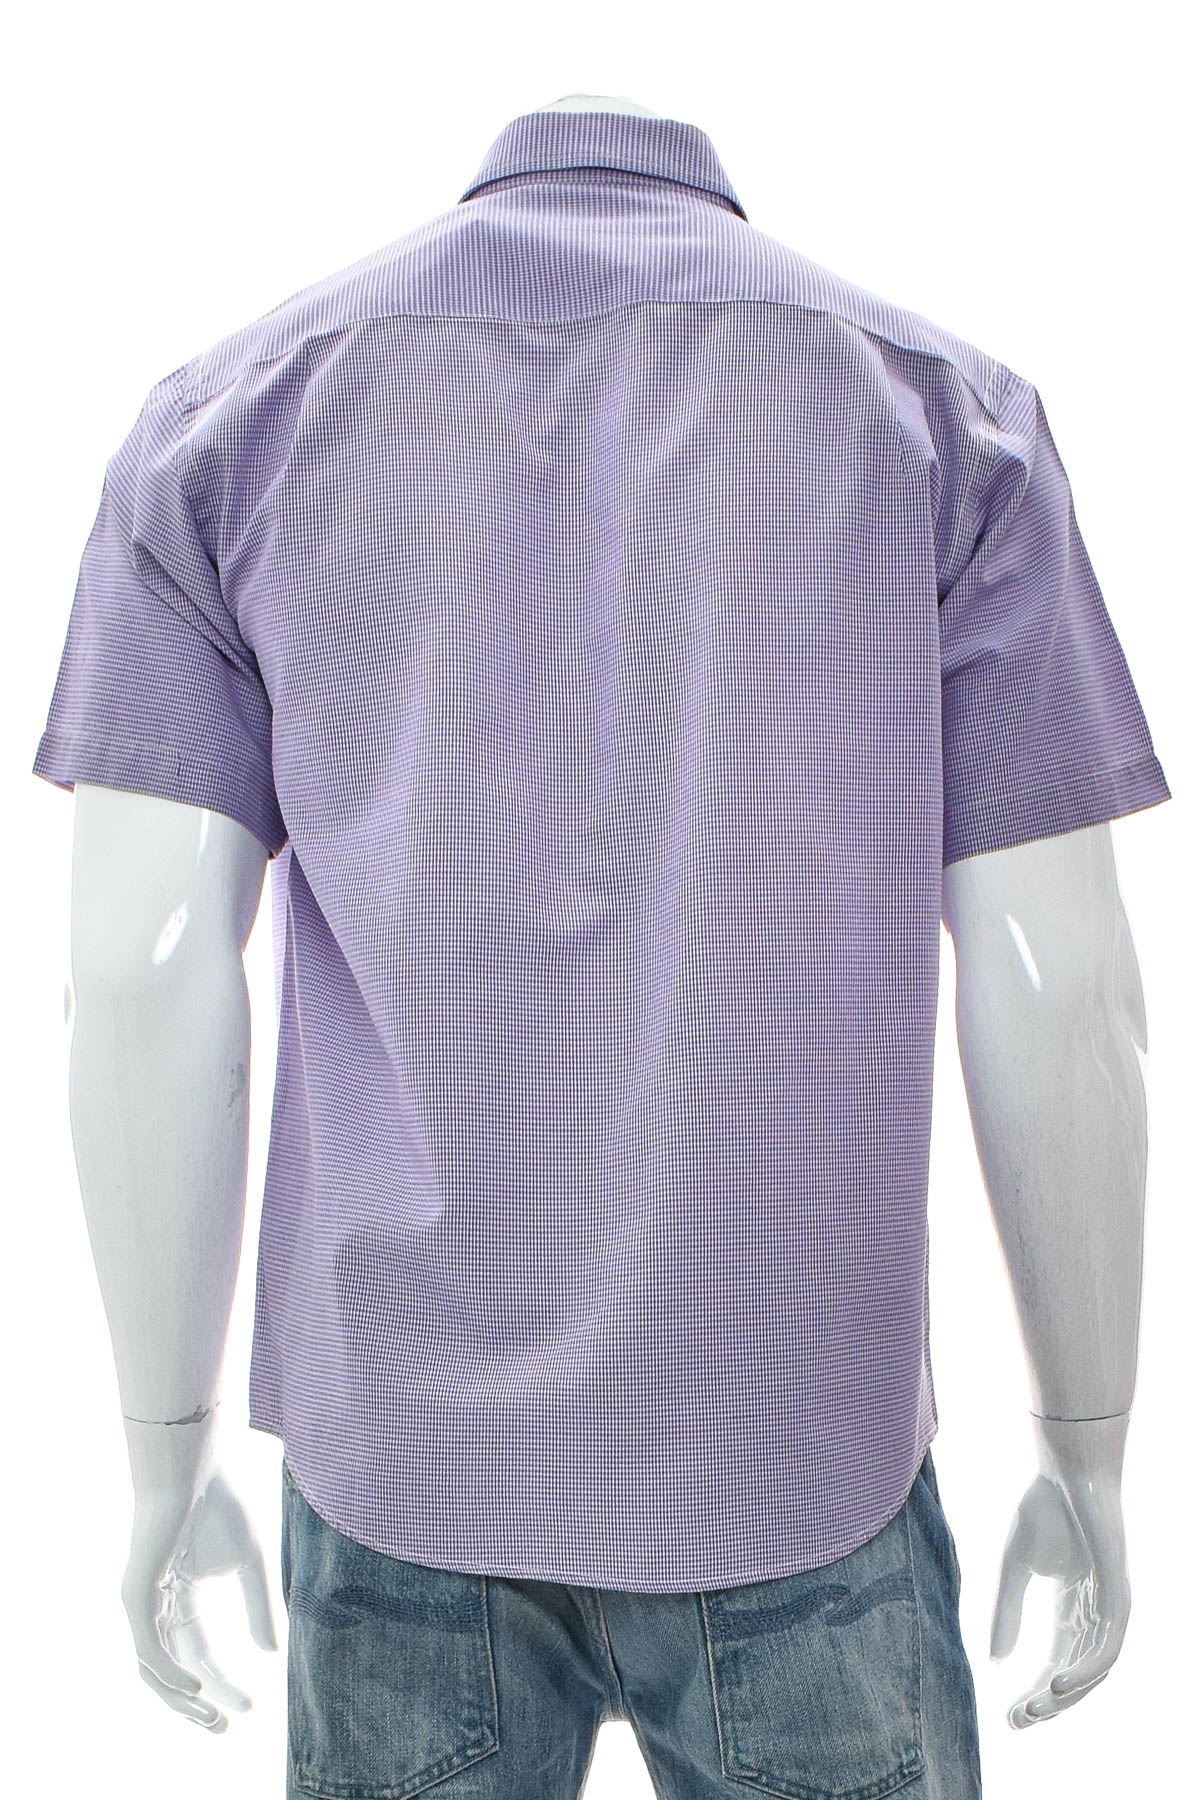 Men's shirt - Secolo - 1